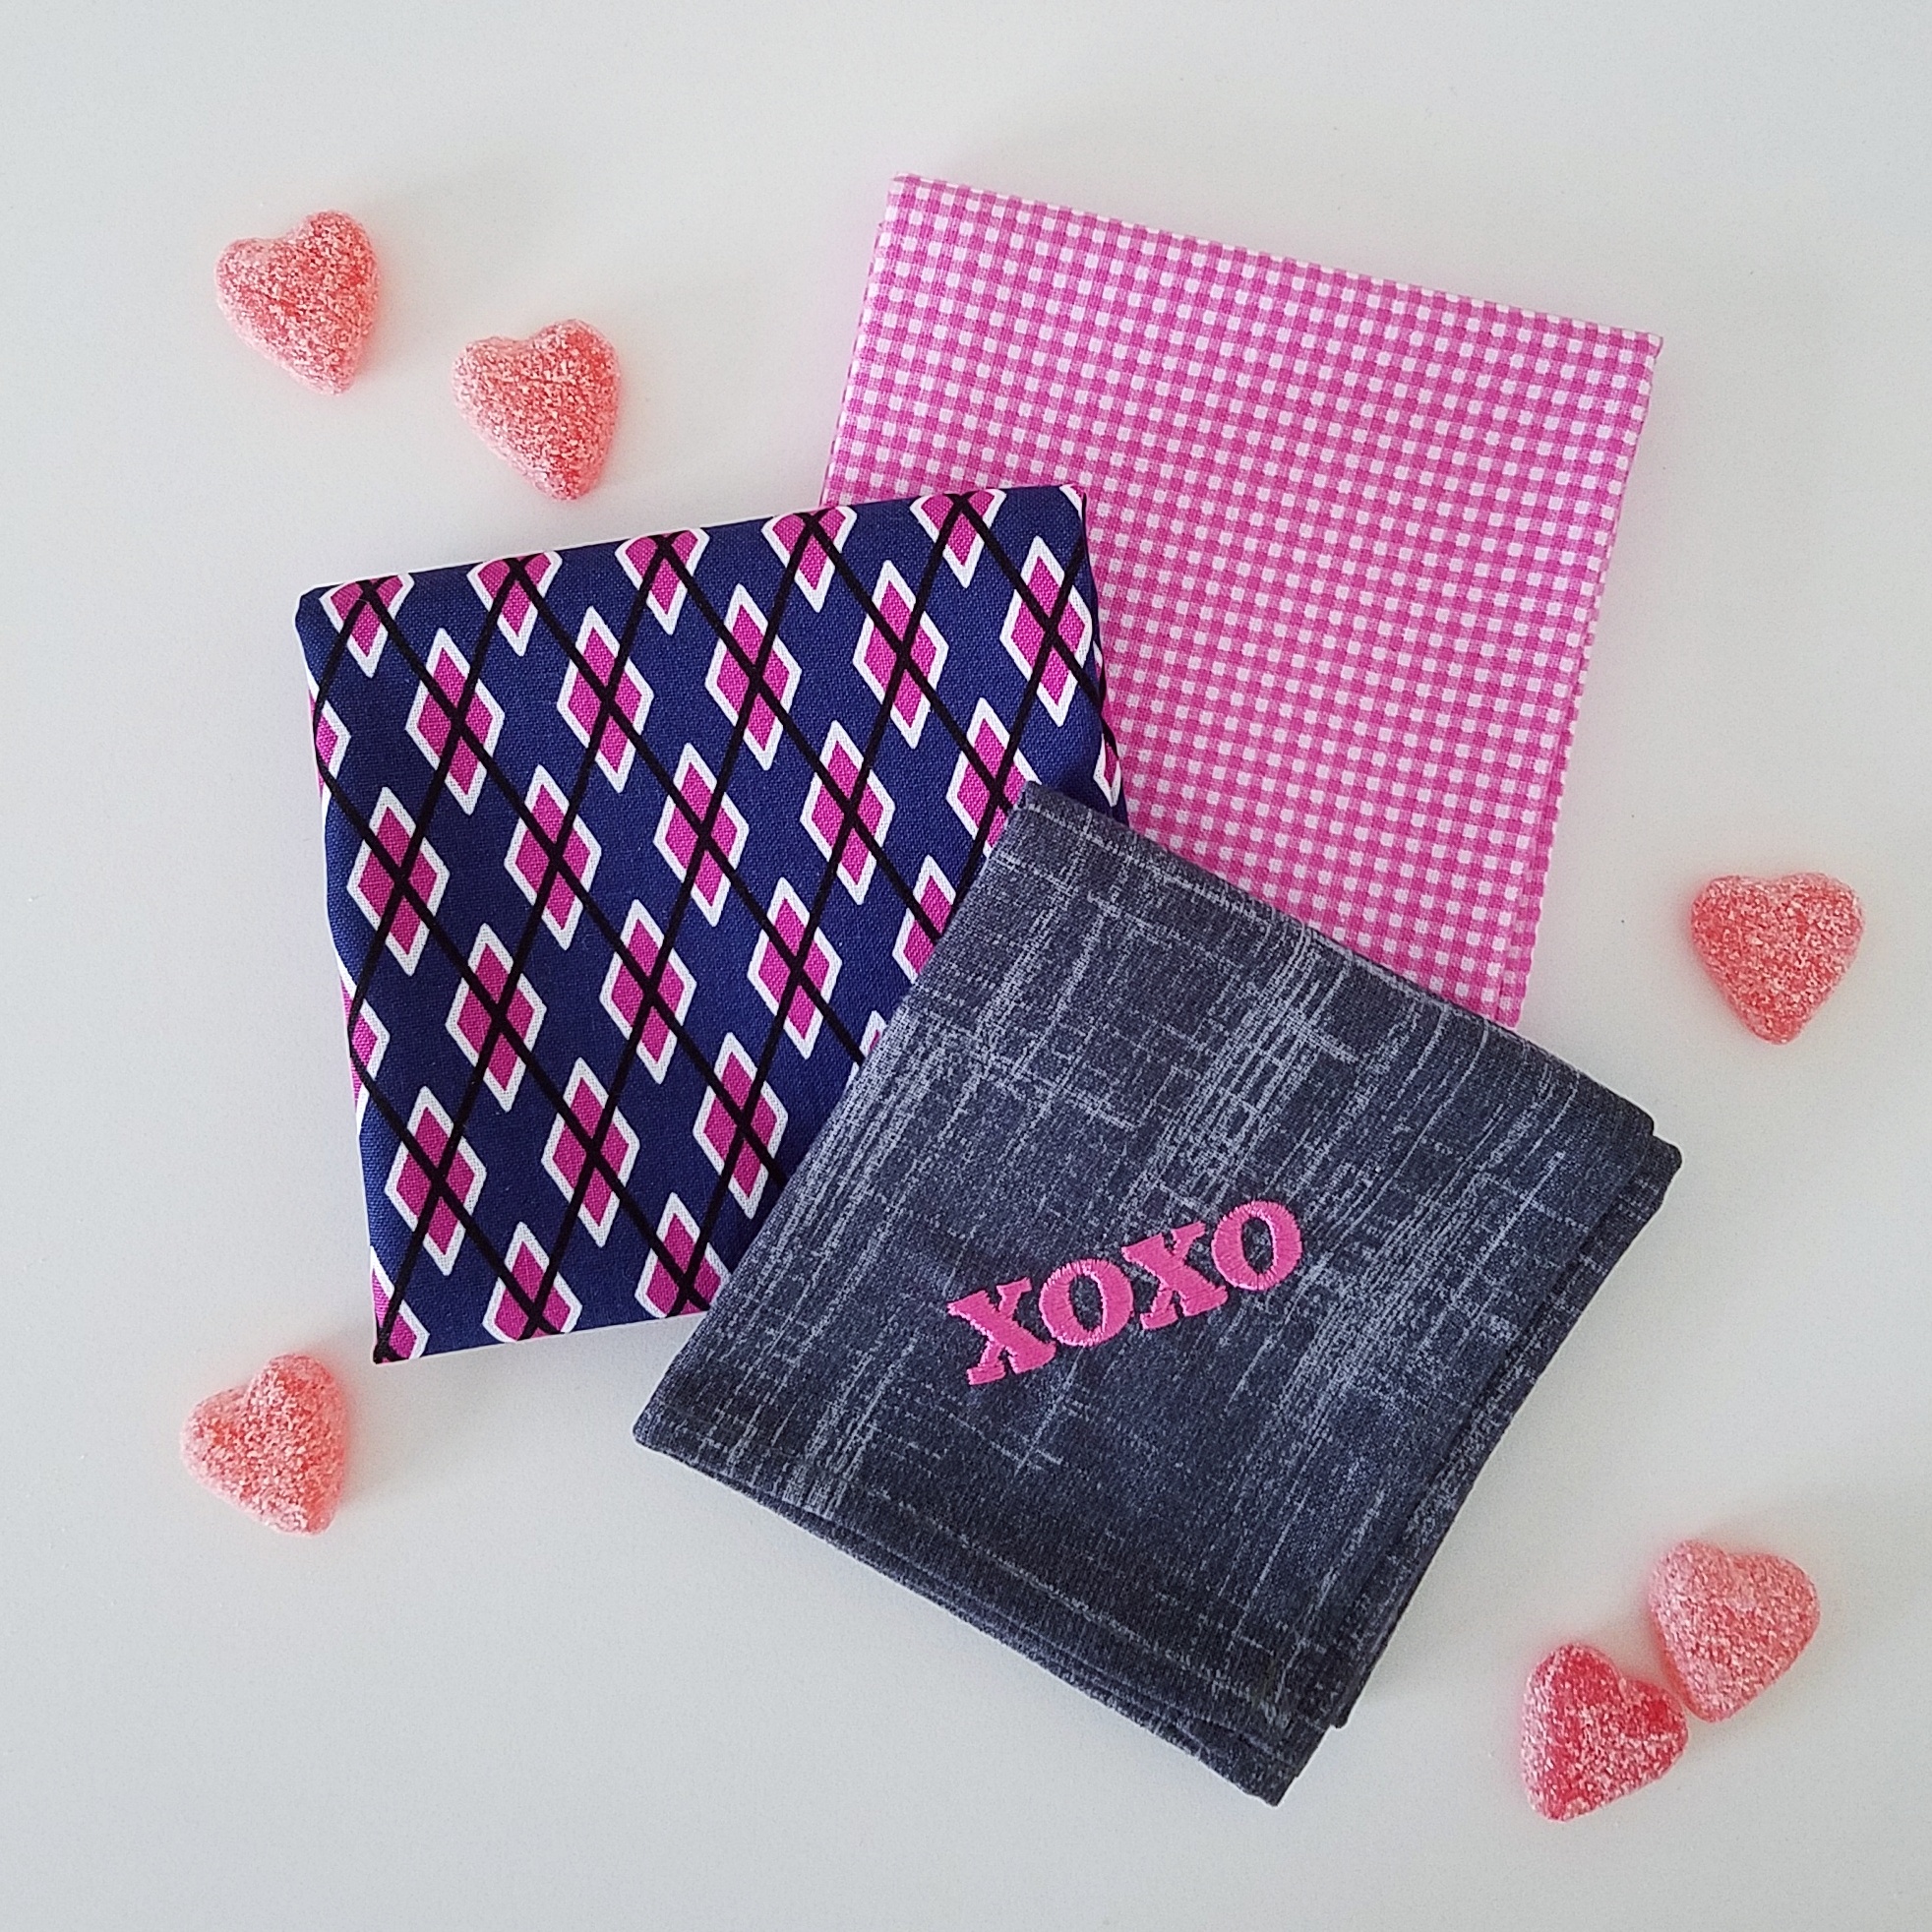 Need a Valentine's Gift Idea for Men? - The Handkerchief Shop